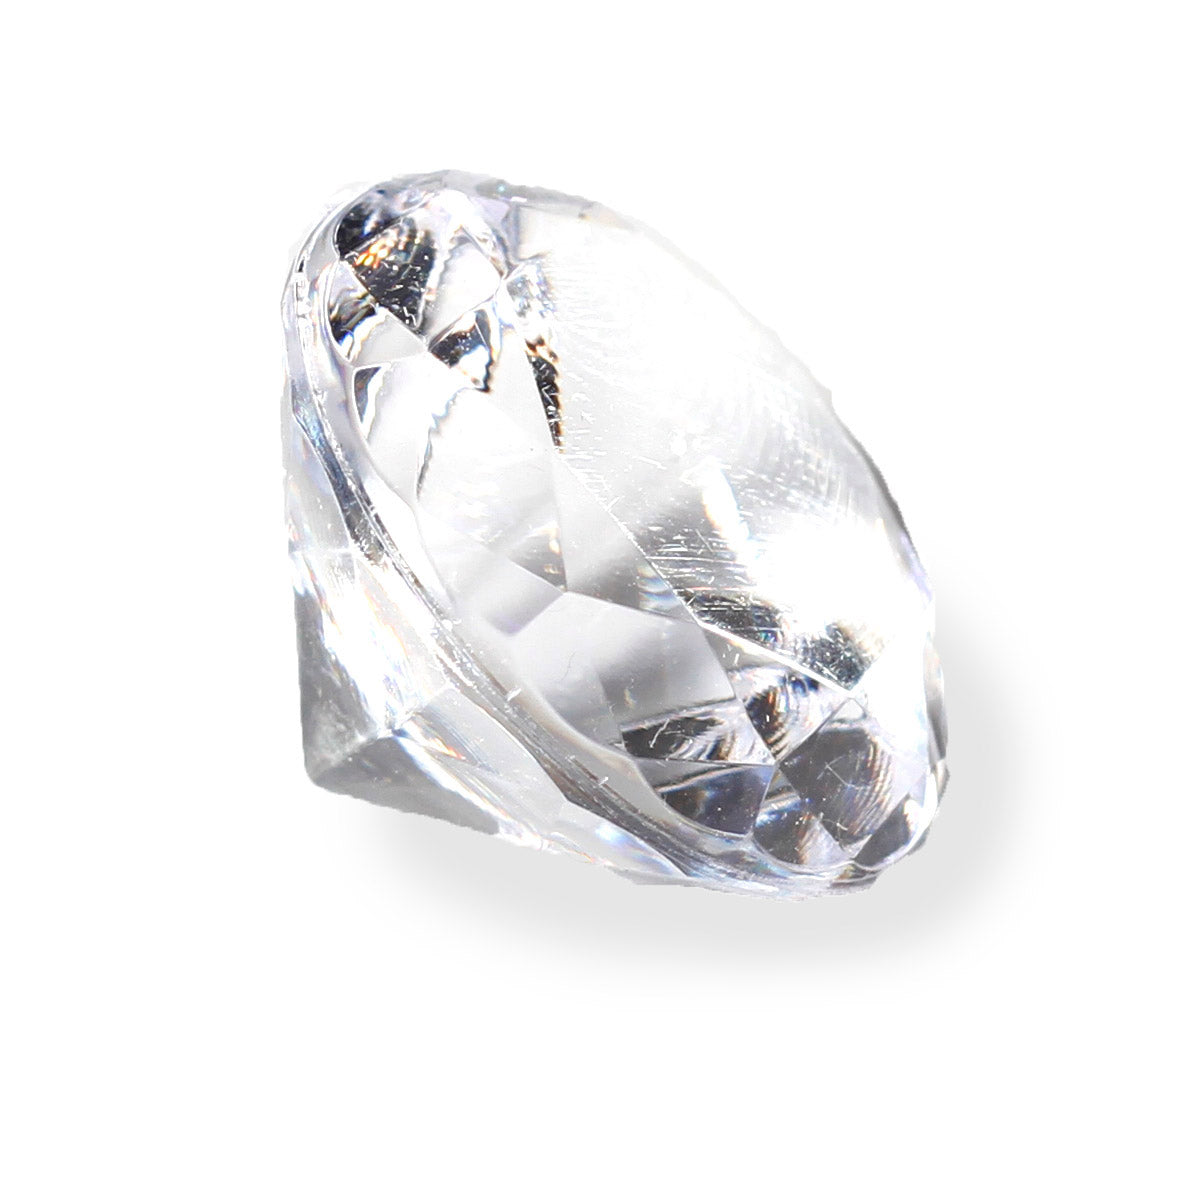 Large Acrylic Plastic Diamond 1 Inch diameter - 1 PIECE - 1 Piece